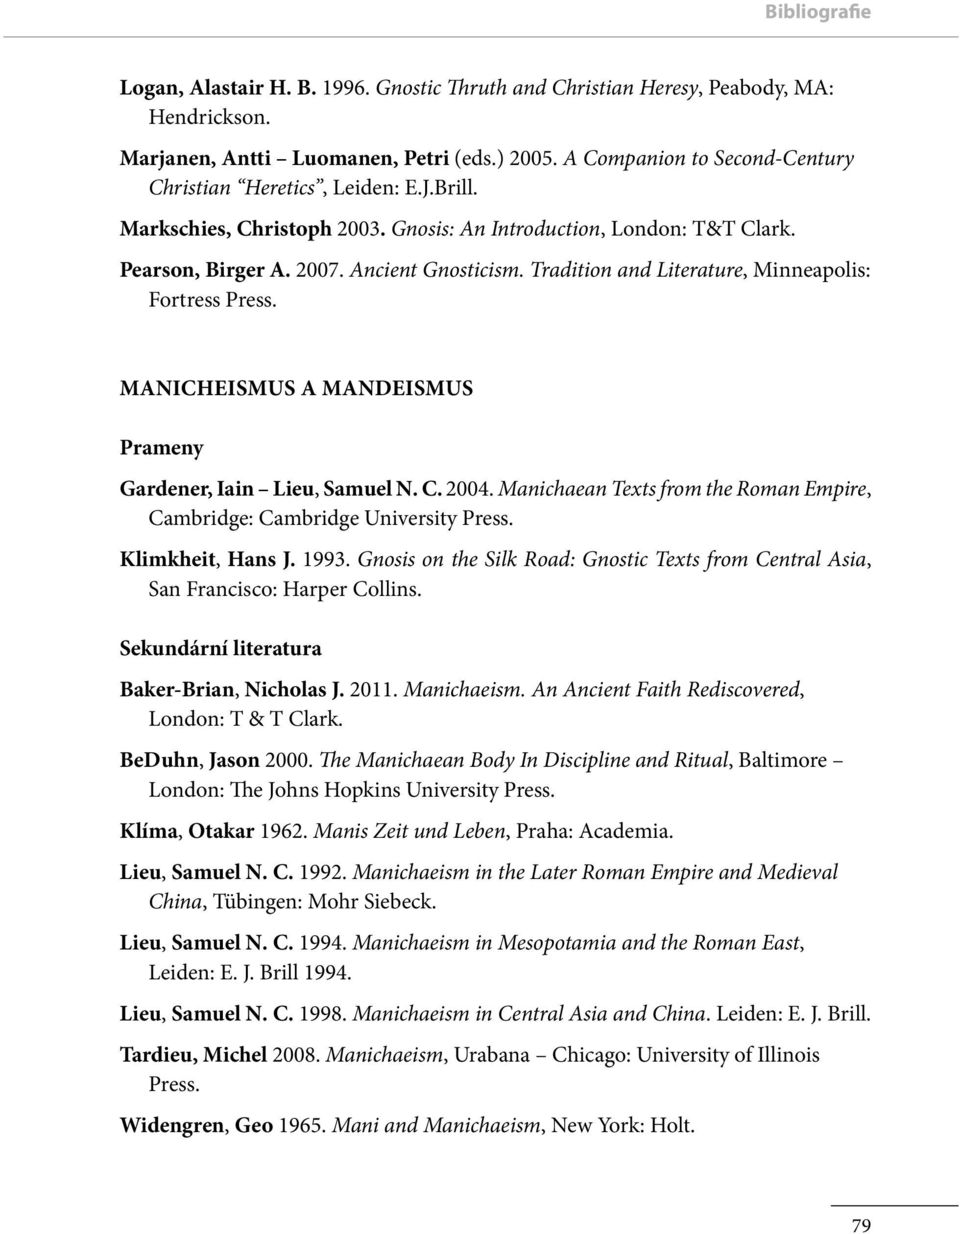 MANICHEISMUS A MANDEISMUS Prameny Gardener, Iain Lieu, Samuel N. C. 2004. Manichaean Texts from the Roman Empire, Cambridge: Cambridge University Press. Klimkheit, Hans J. 1993.